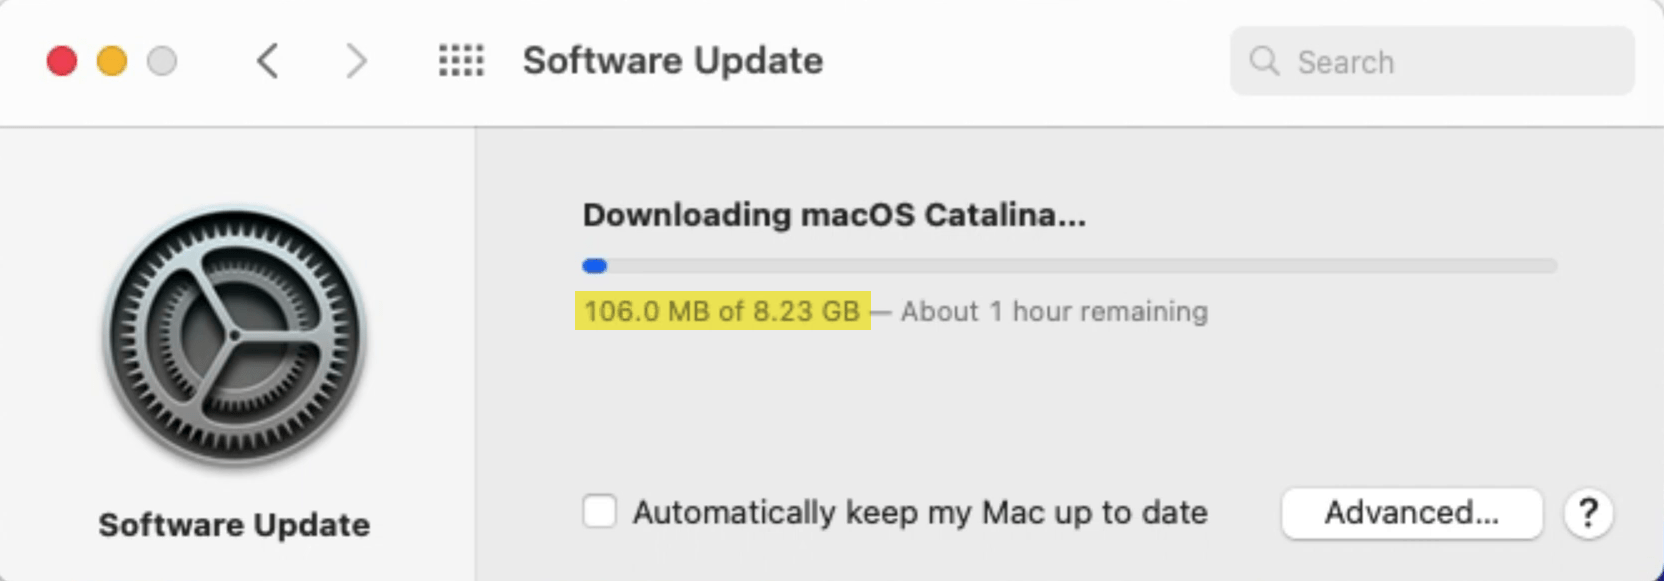 Downloading macOS Catalina